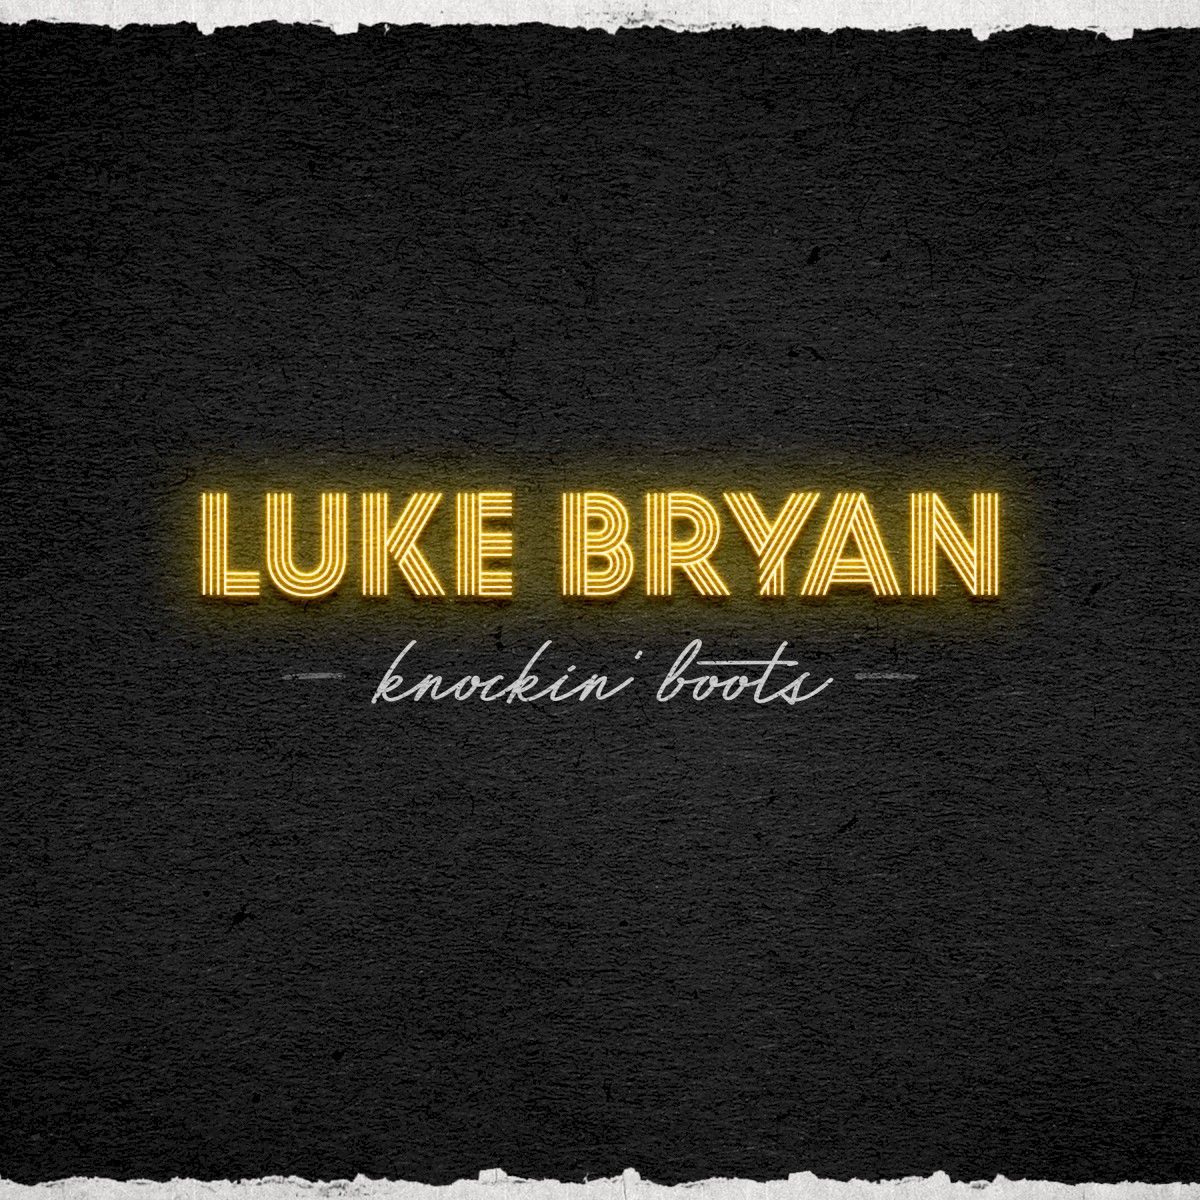 Luke Bryan - Knockin' Boots Single Cover